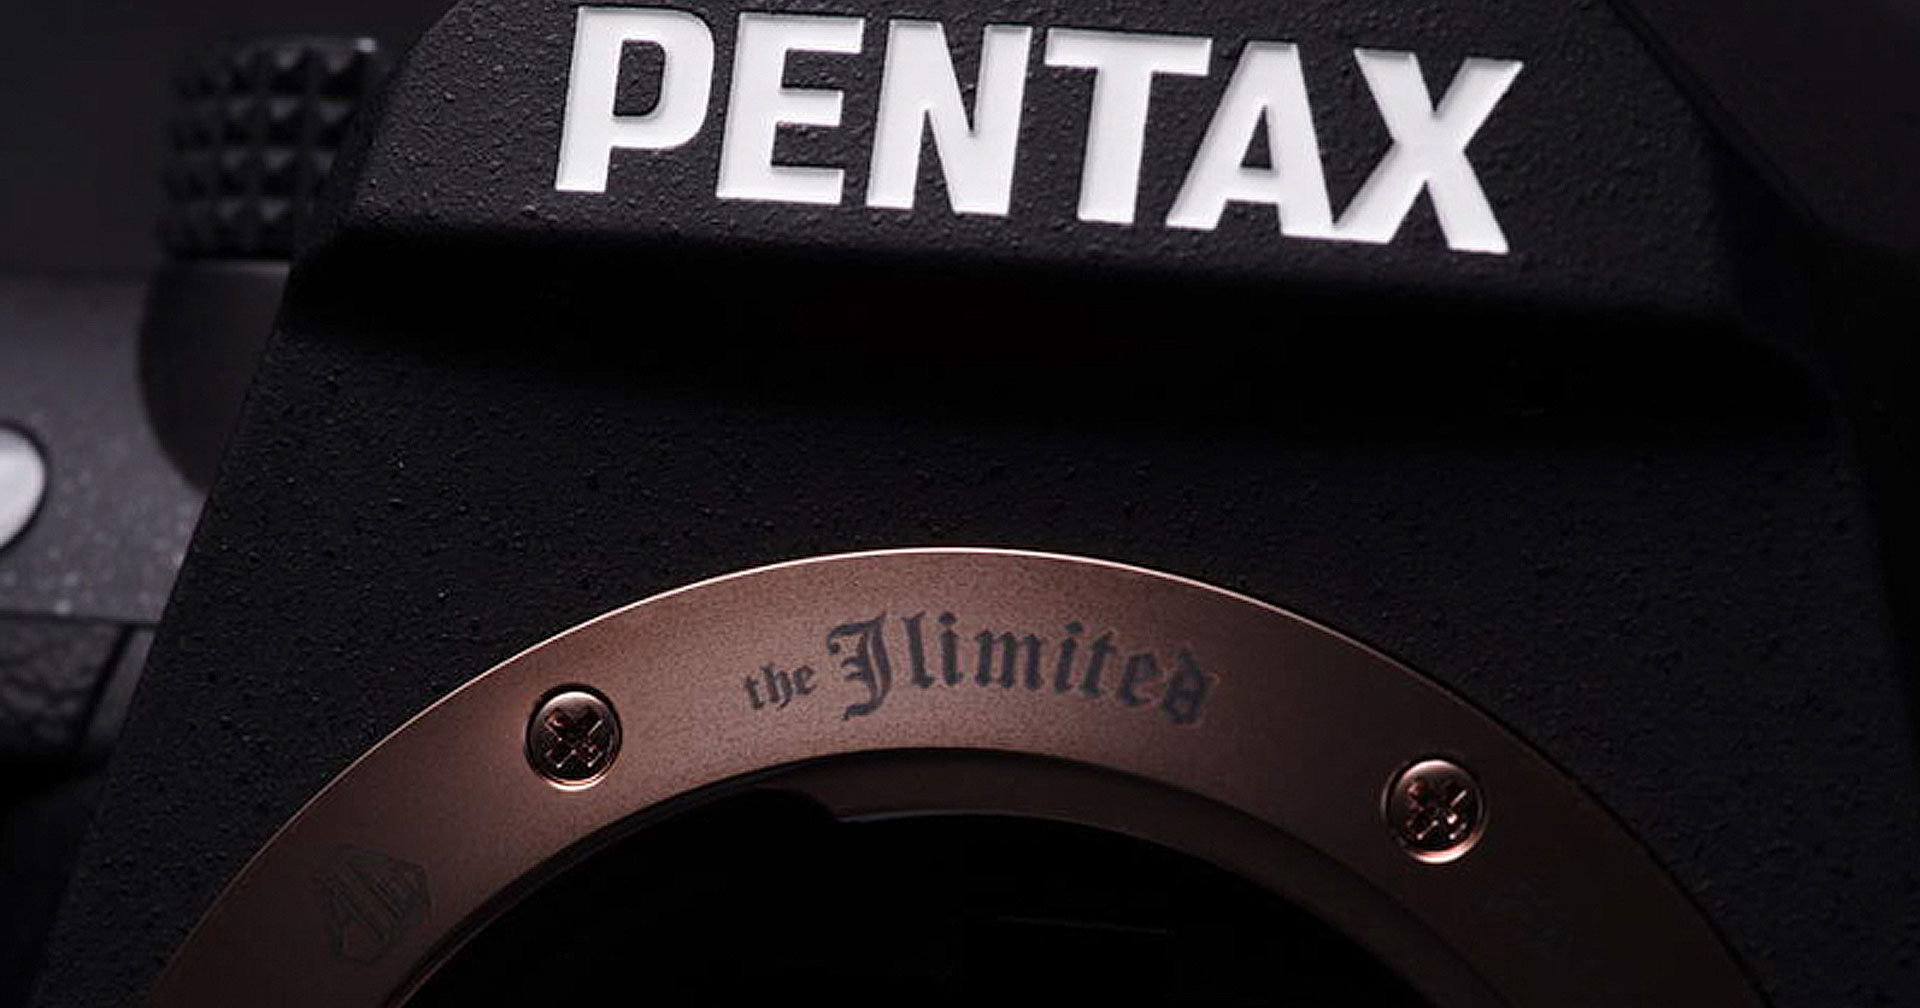 PENTAX เปิดบริการเปลี่ยนเมาท์ J Limited Duratect เทคโนโลยีกันรอย ให้กับกล้อง DSLR K-mount